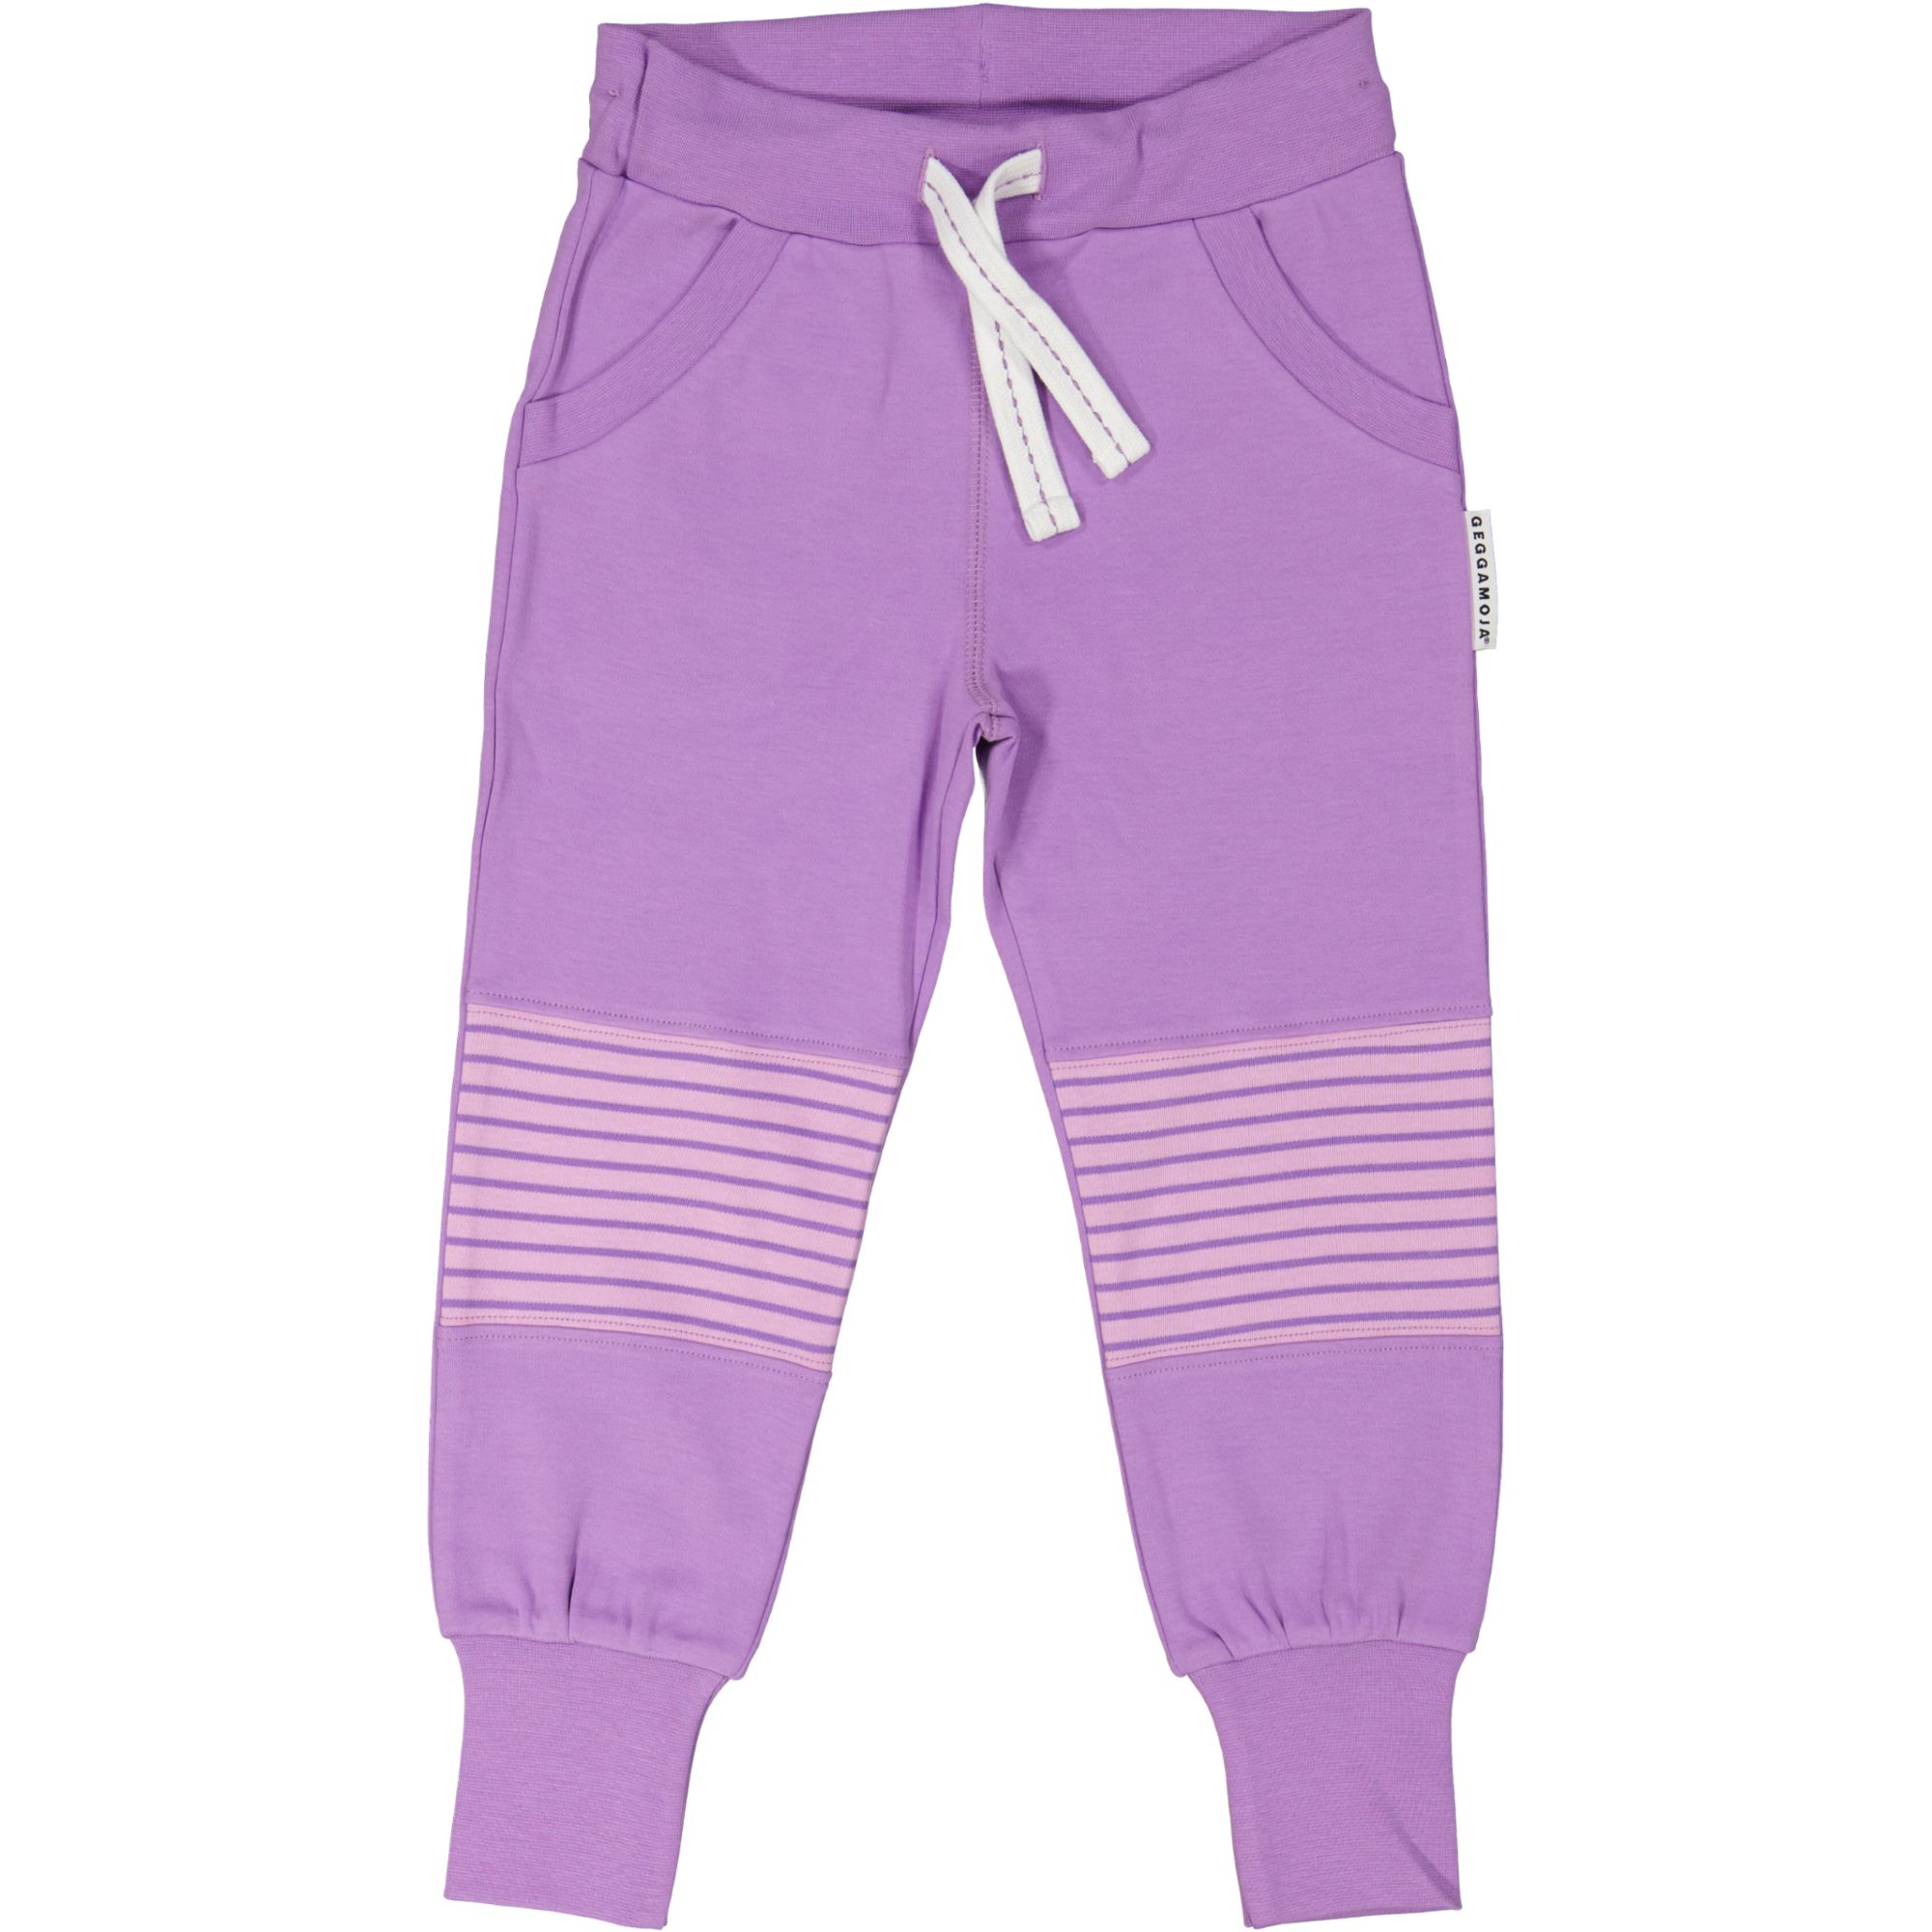 Long pants L.purple/purple 16